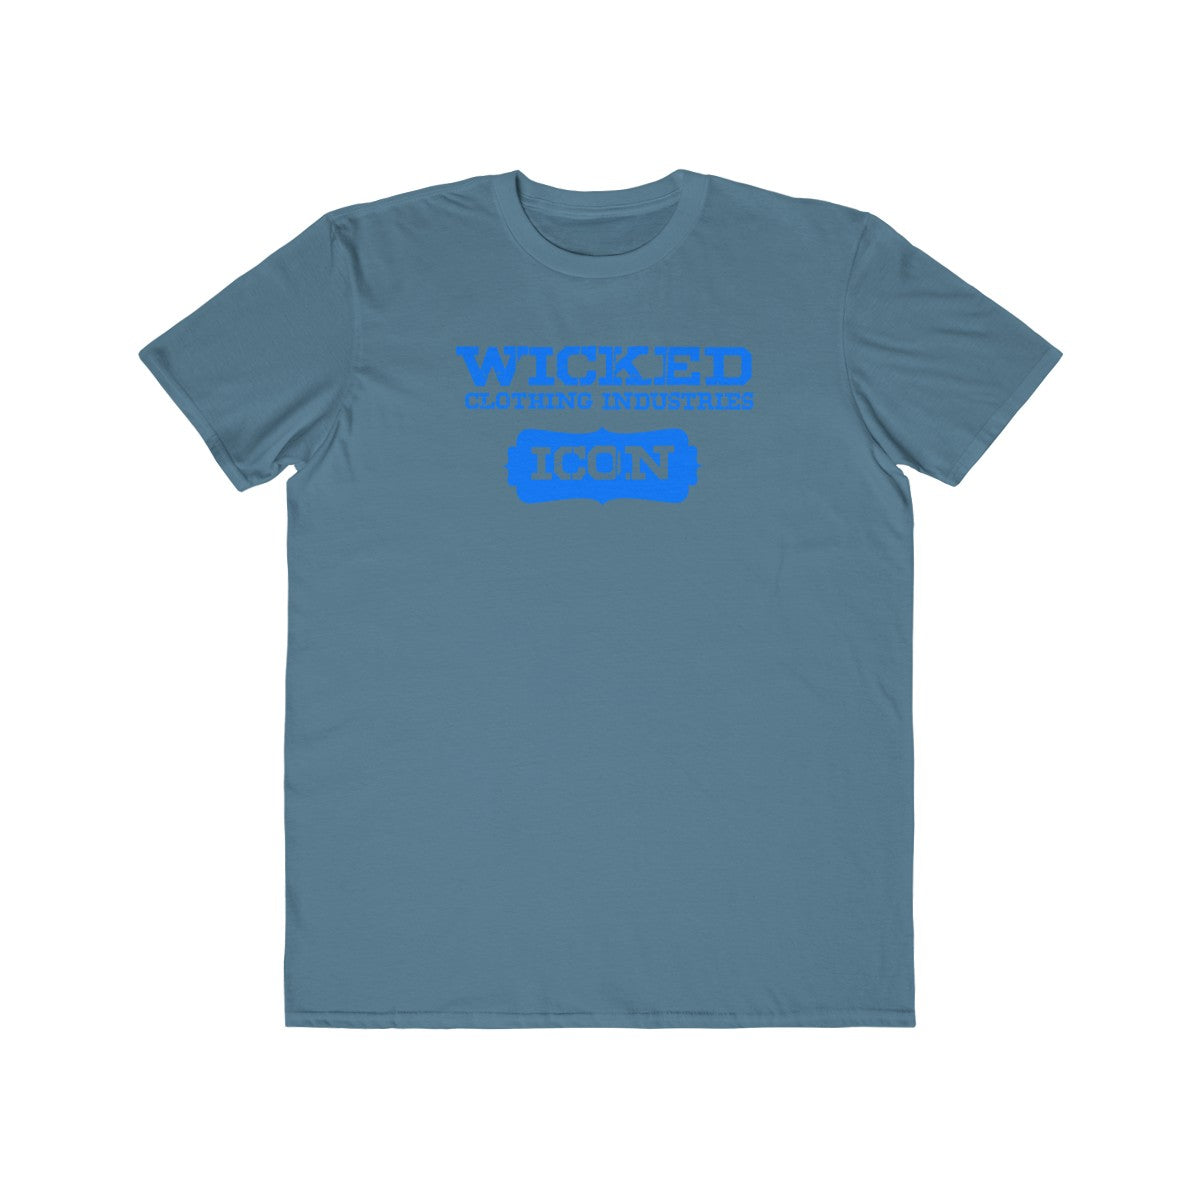 ICON ICE / Tee Shirt